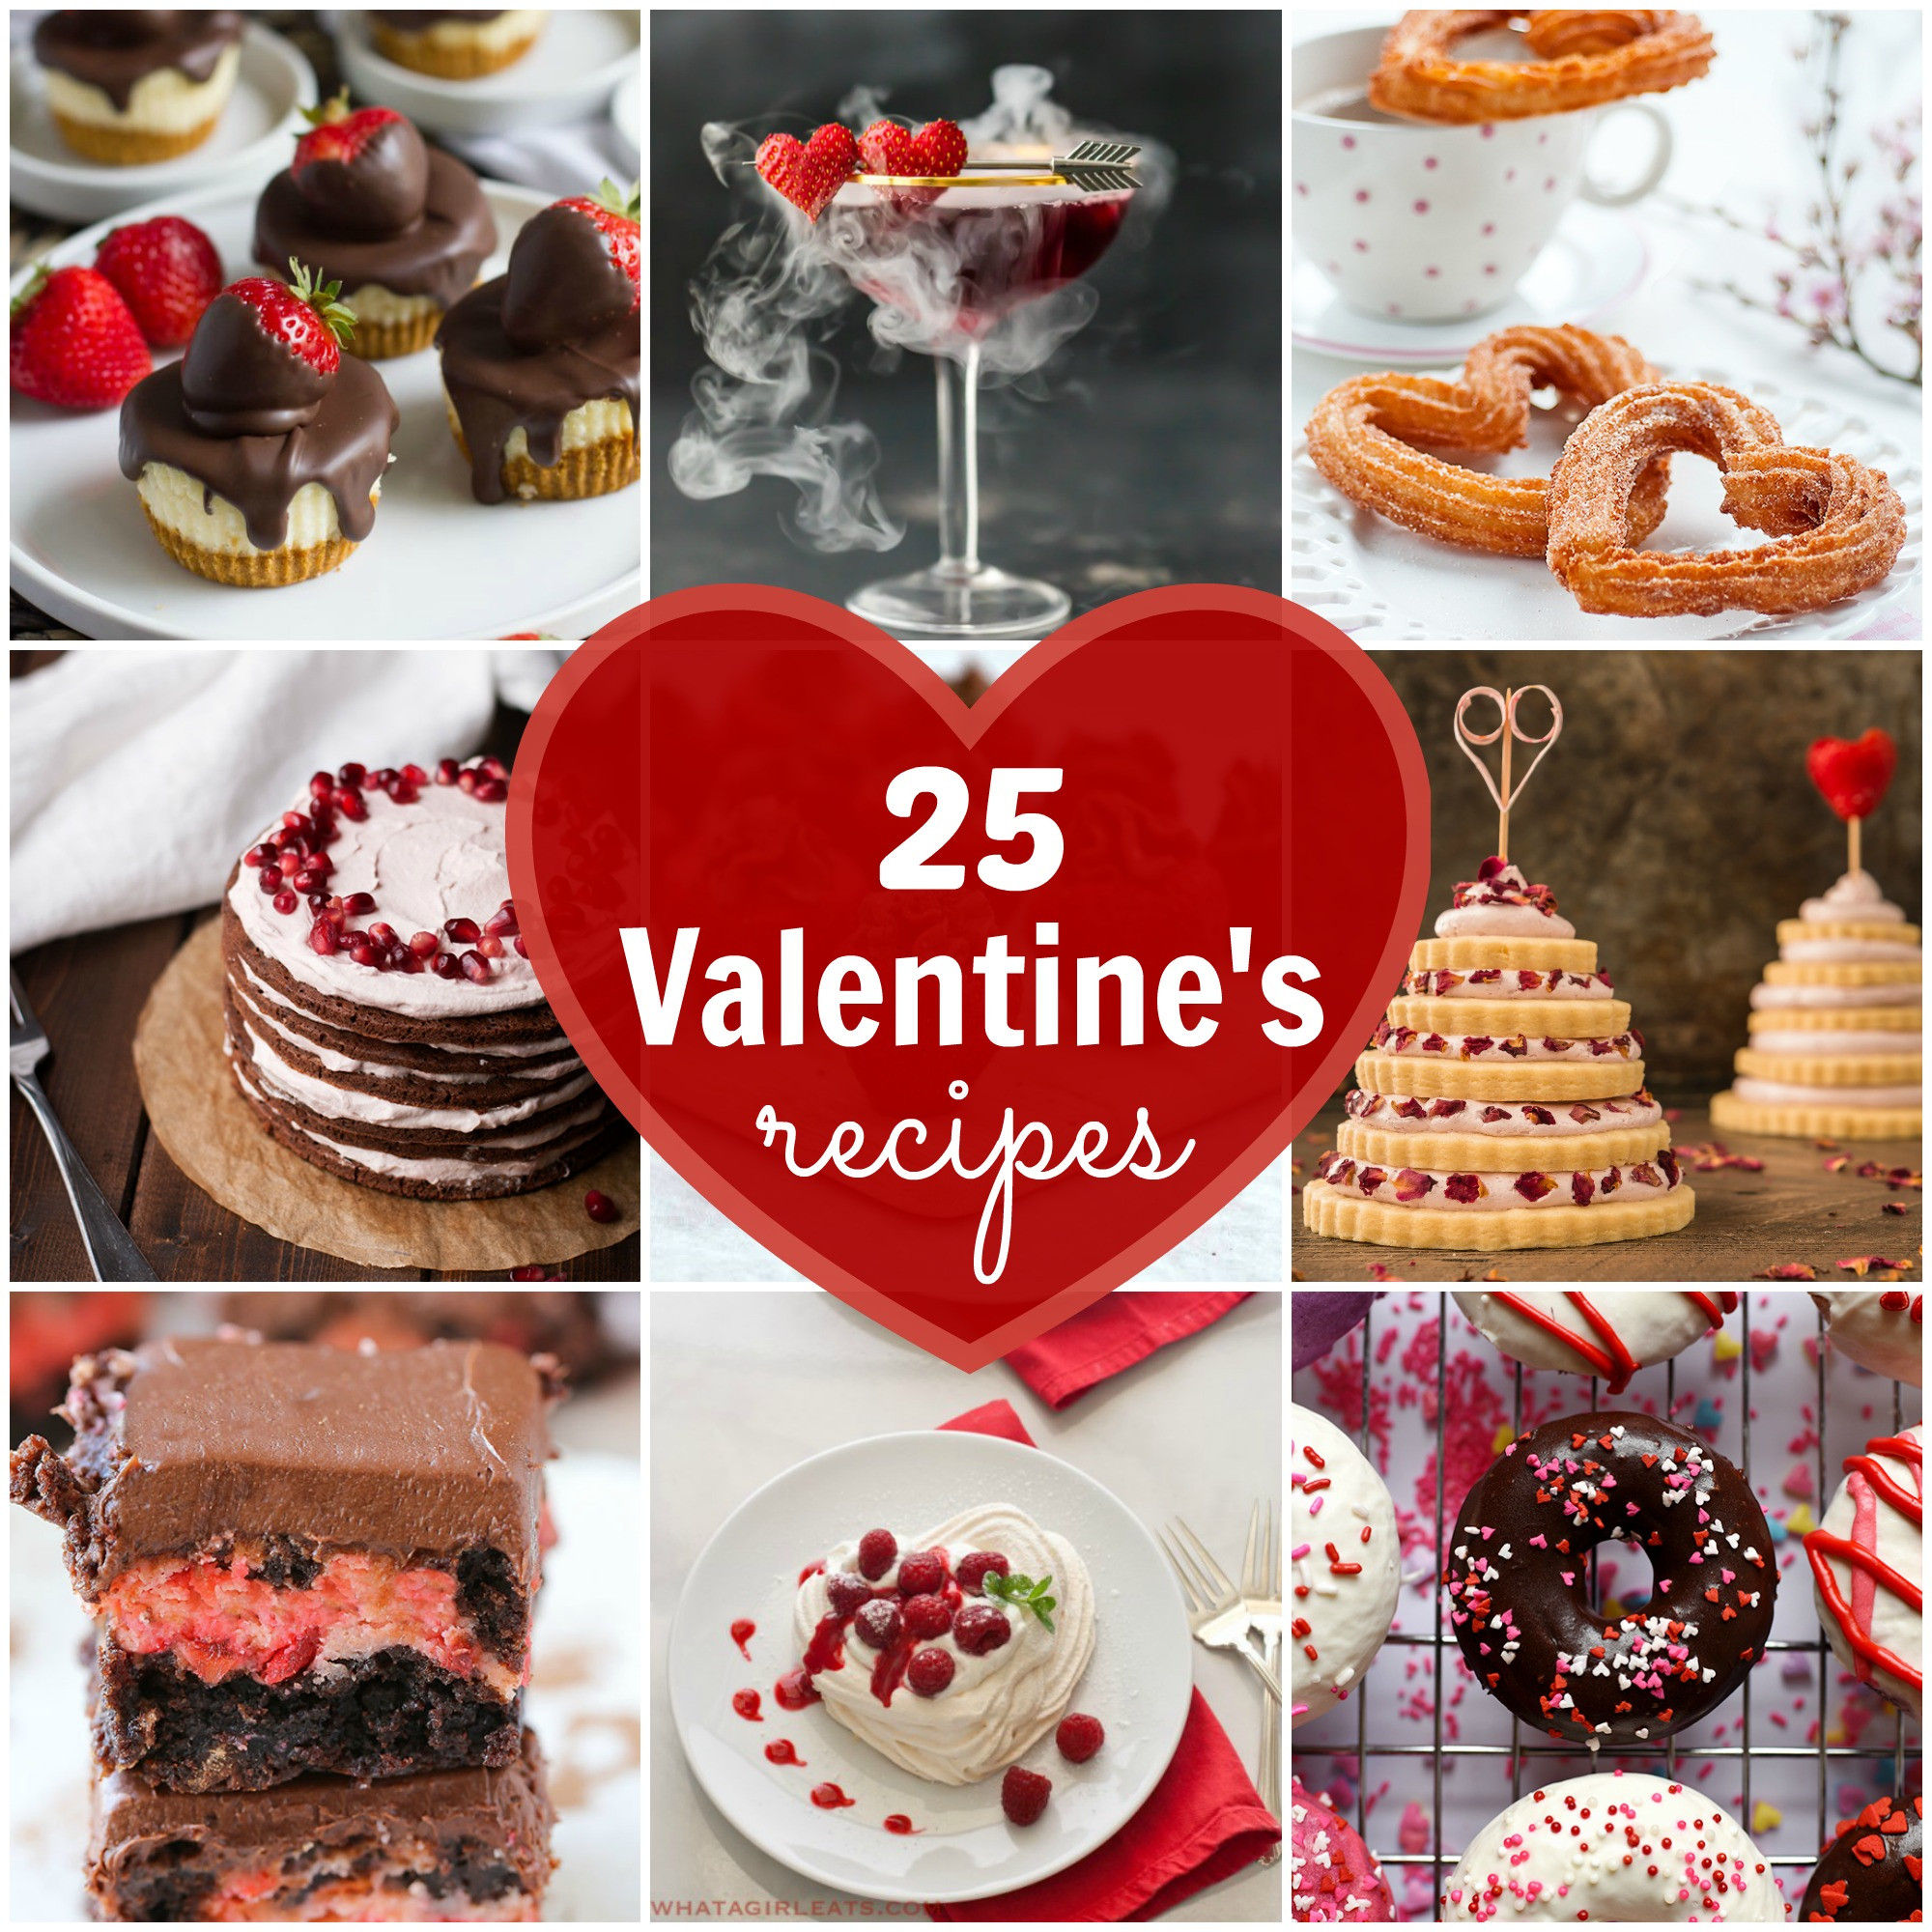 Valentine Recipes Desserts
 25 Valentine s Day Dessert And Cocktail Recipes